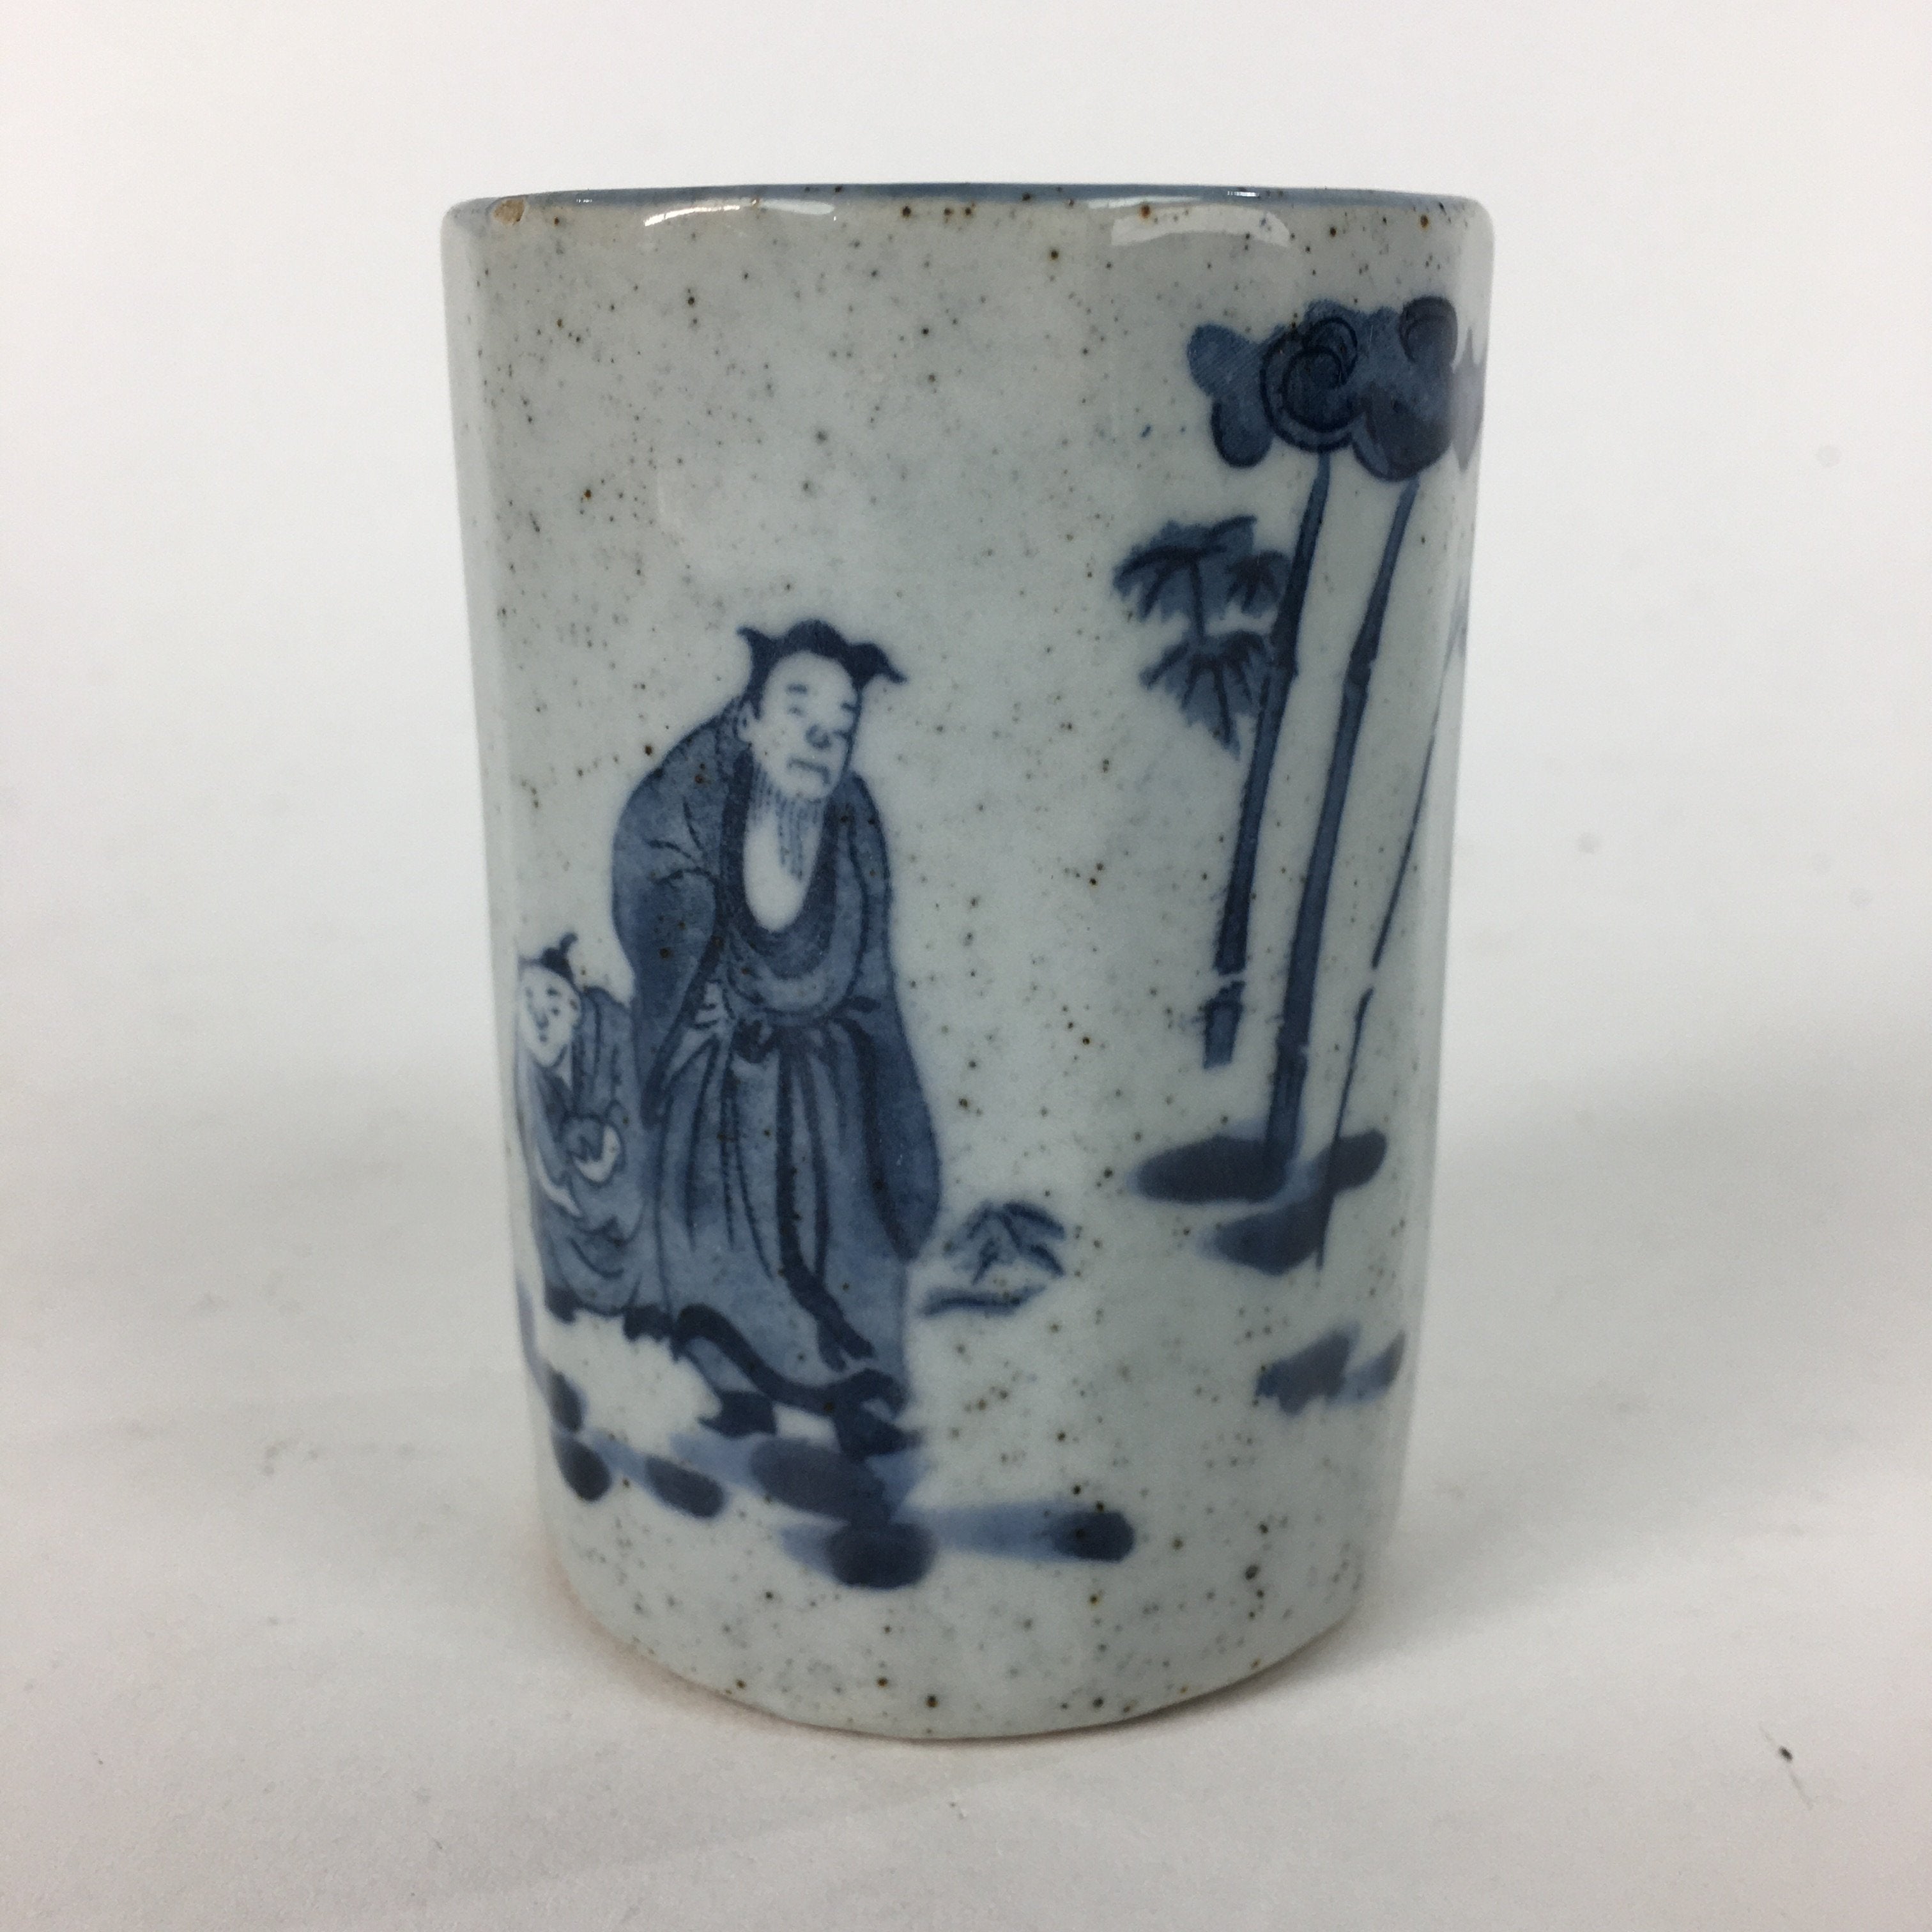 Japanese Ceramic Teacup Yunomi Vtg Gray Chinese Style Blue Design Sencha TC235